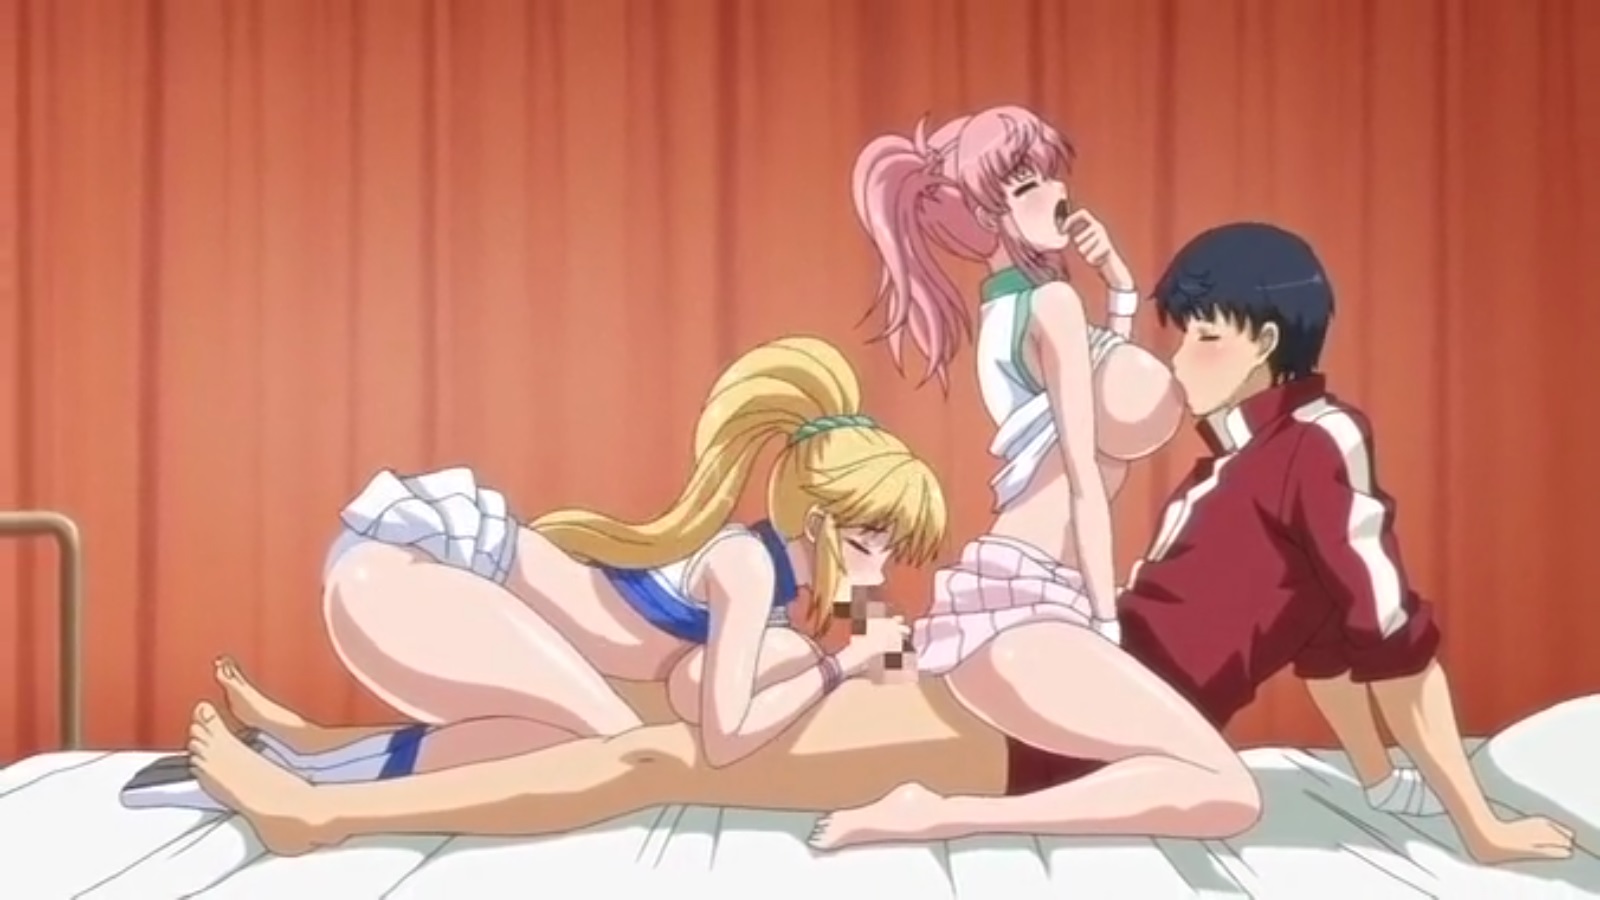 Threesome anime porn